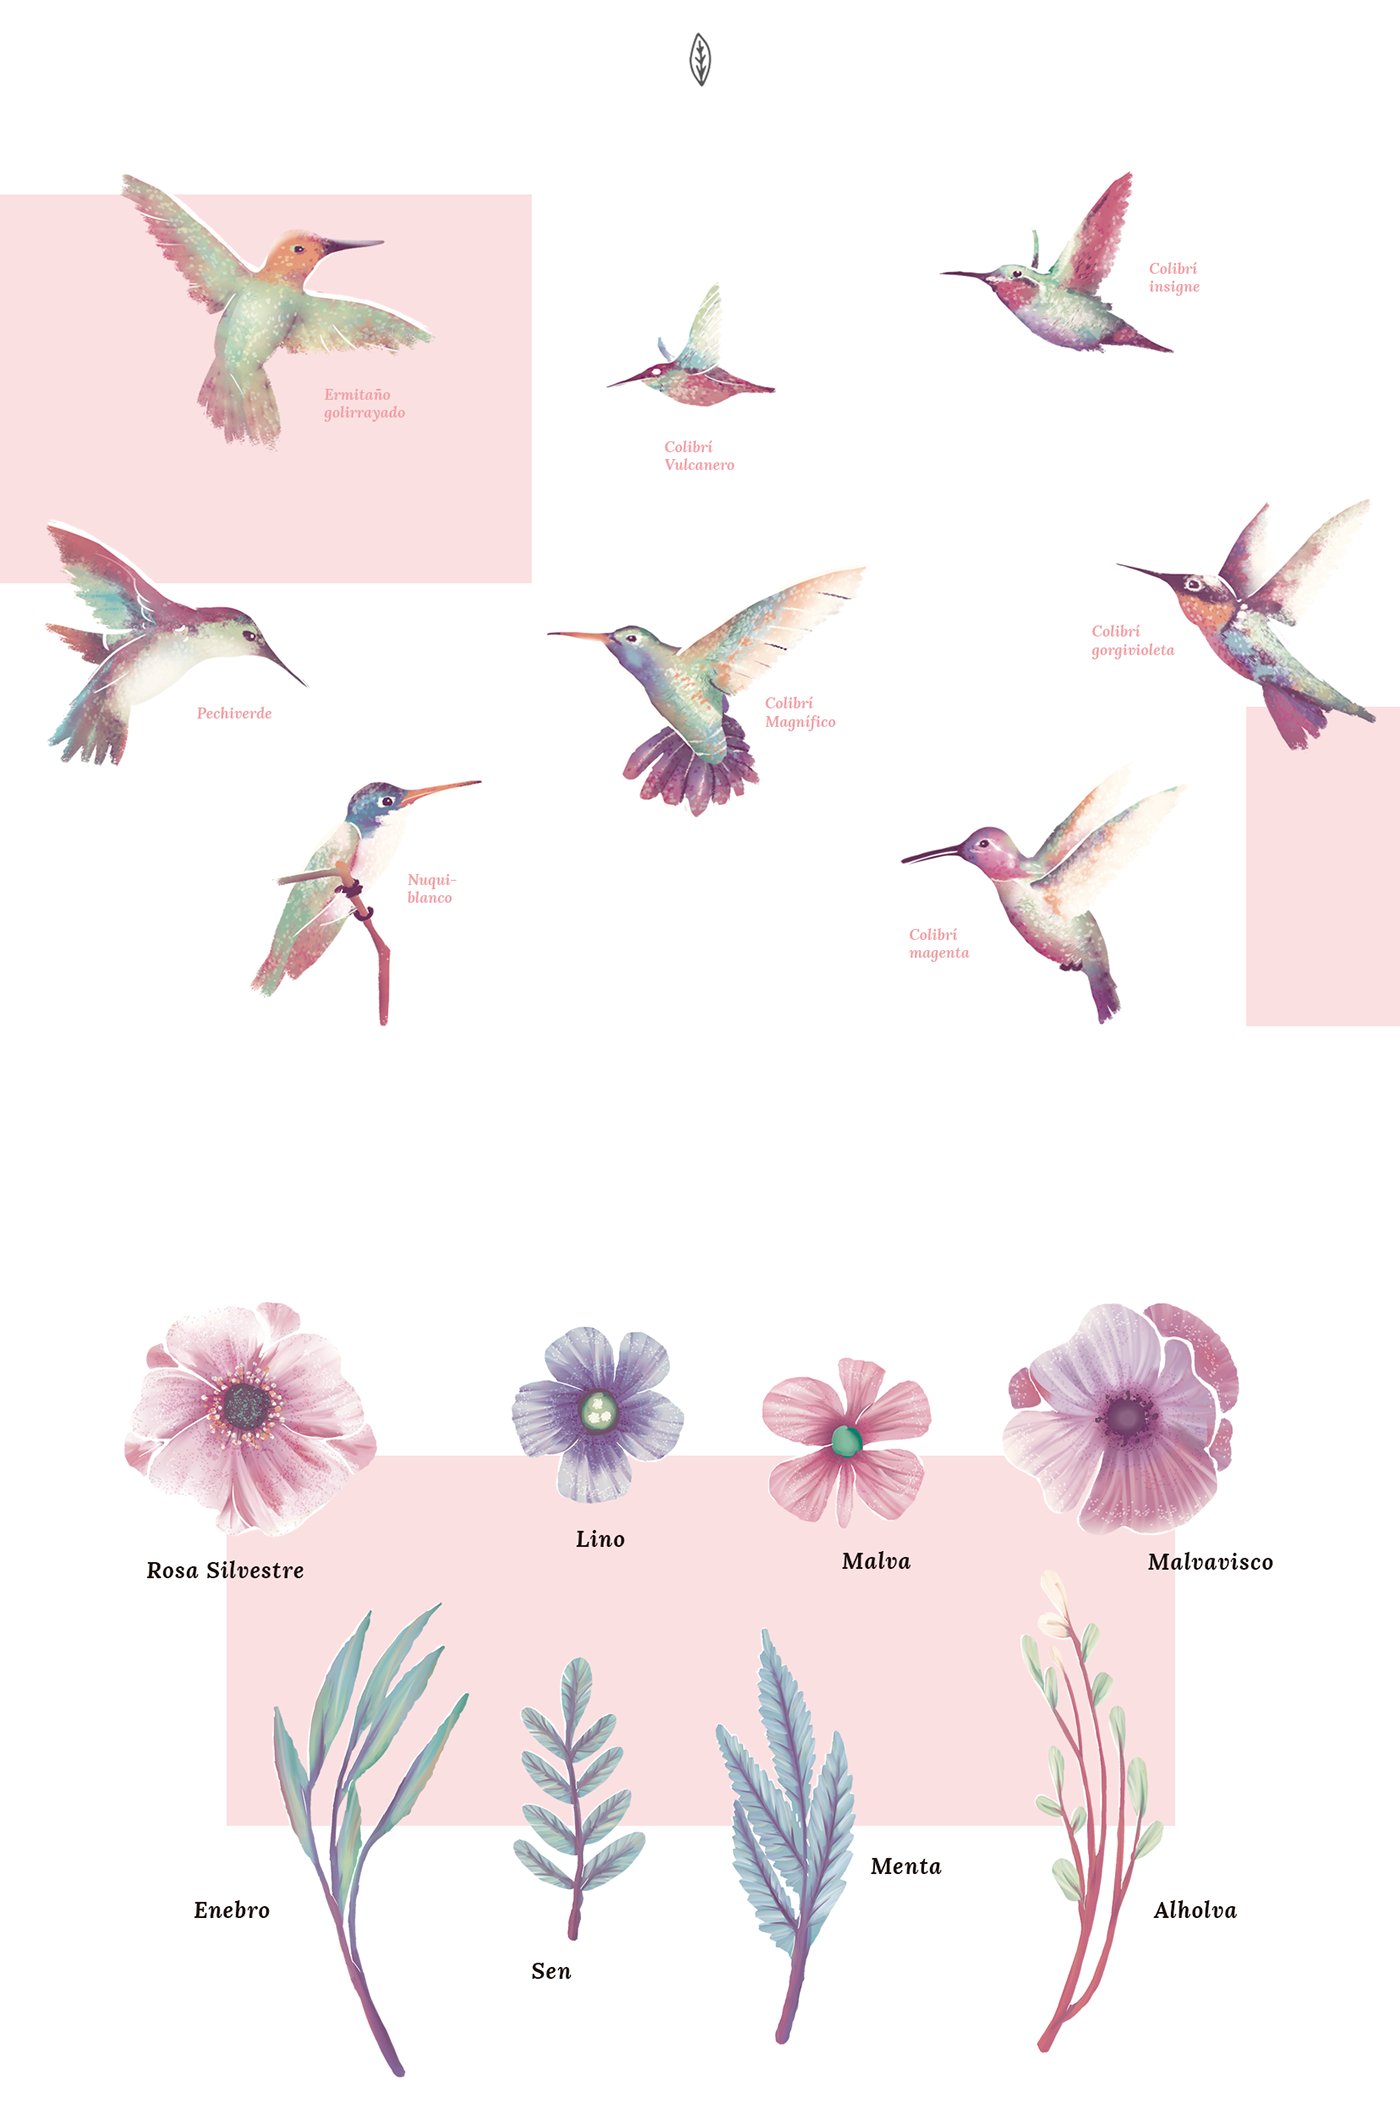 fauna floral botanical colibri poster book Nature